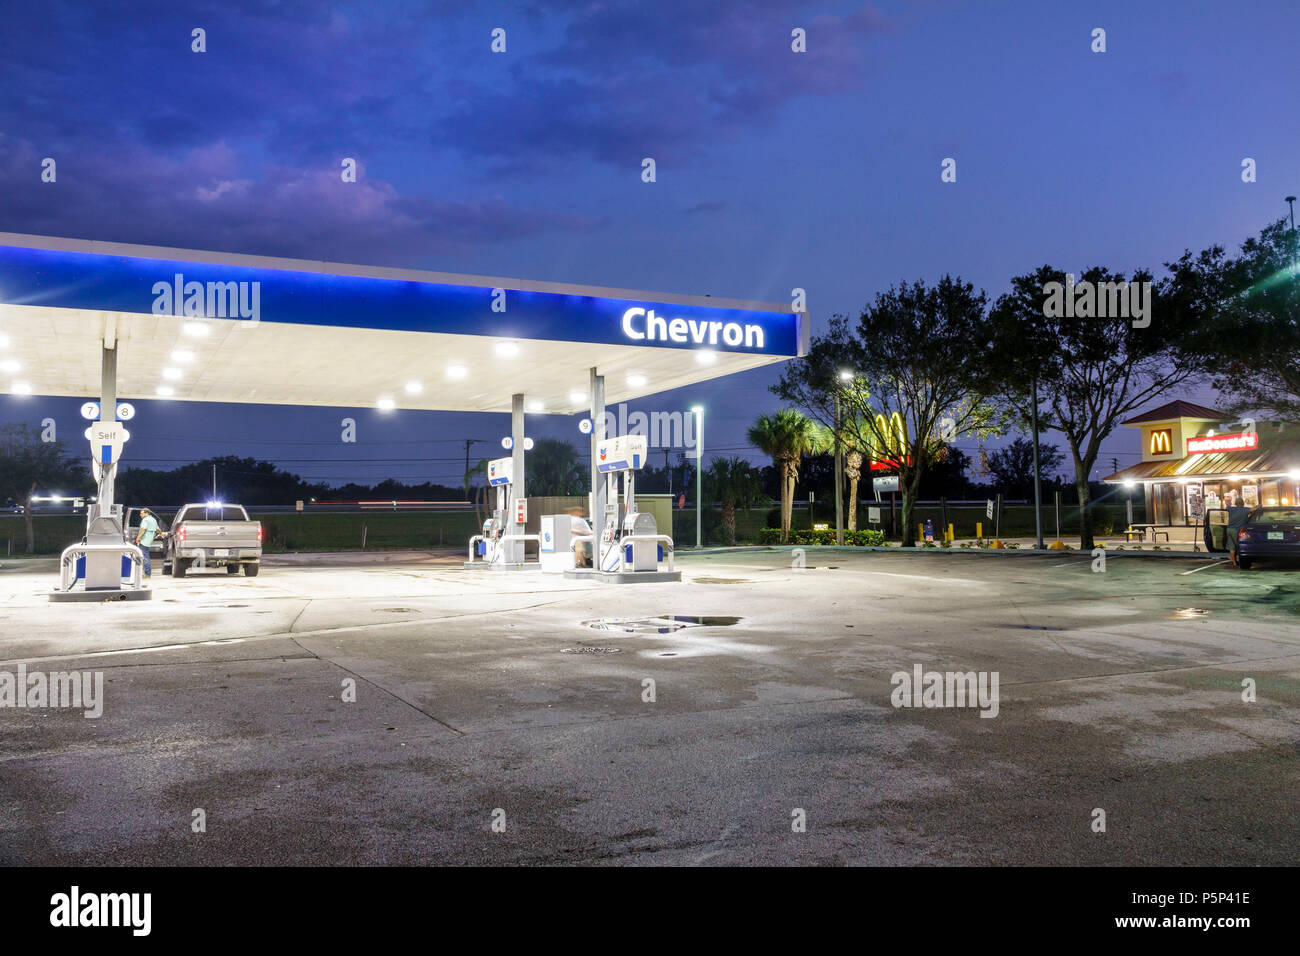 Stuart Florida, Nacht, Chevron, Tankstelle mit Gasfüllung, Pumpen, Baldachin, FL170925235 Stockfoto